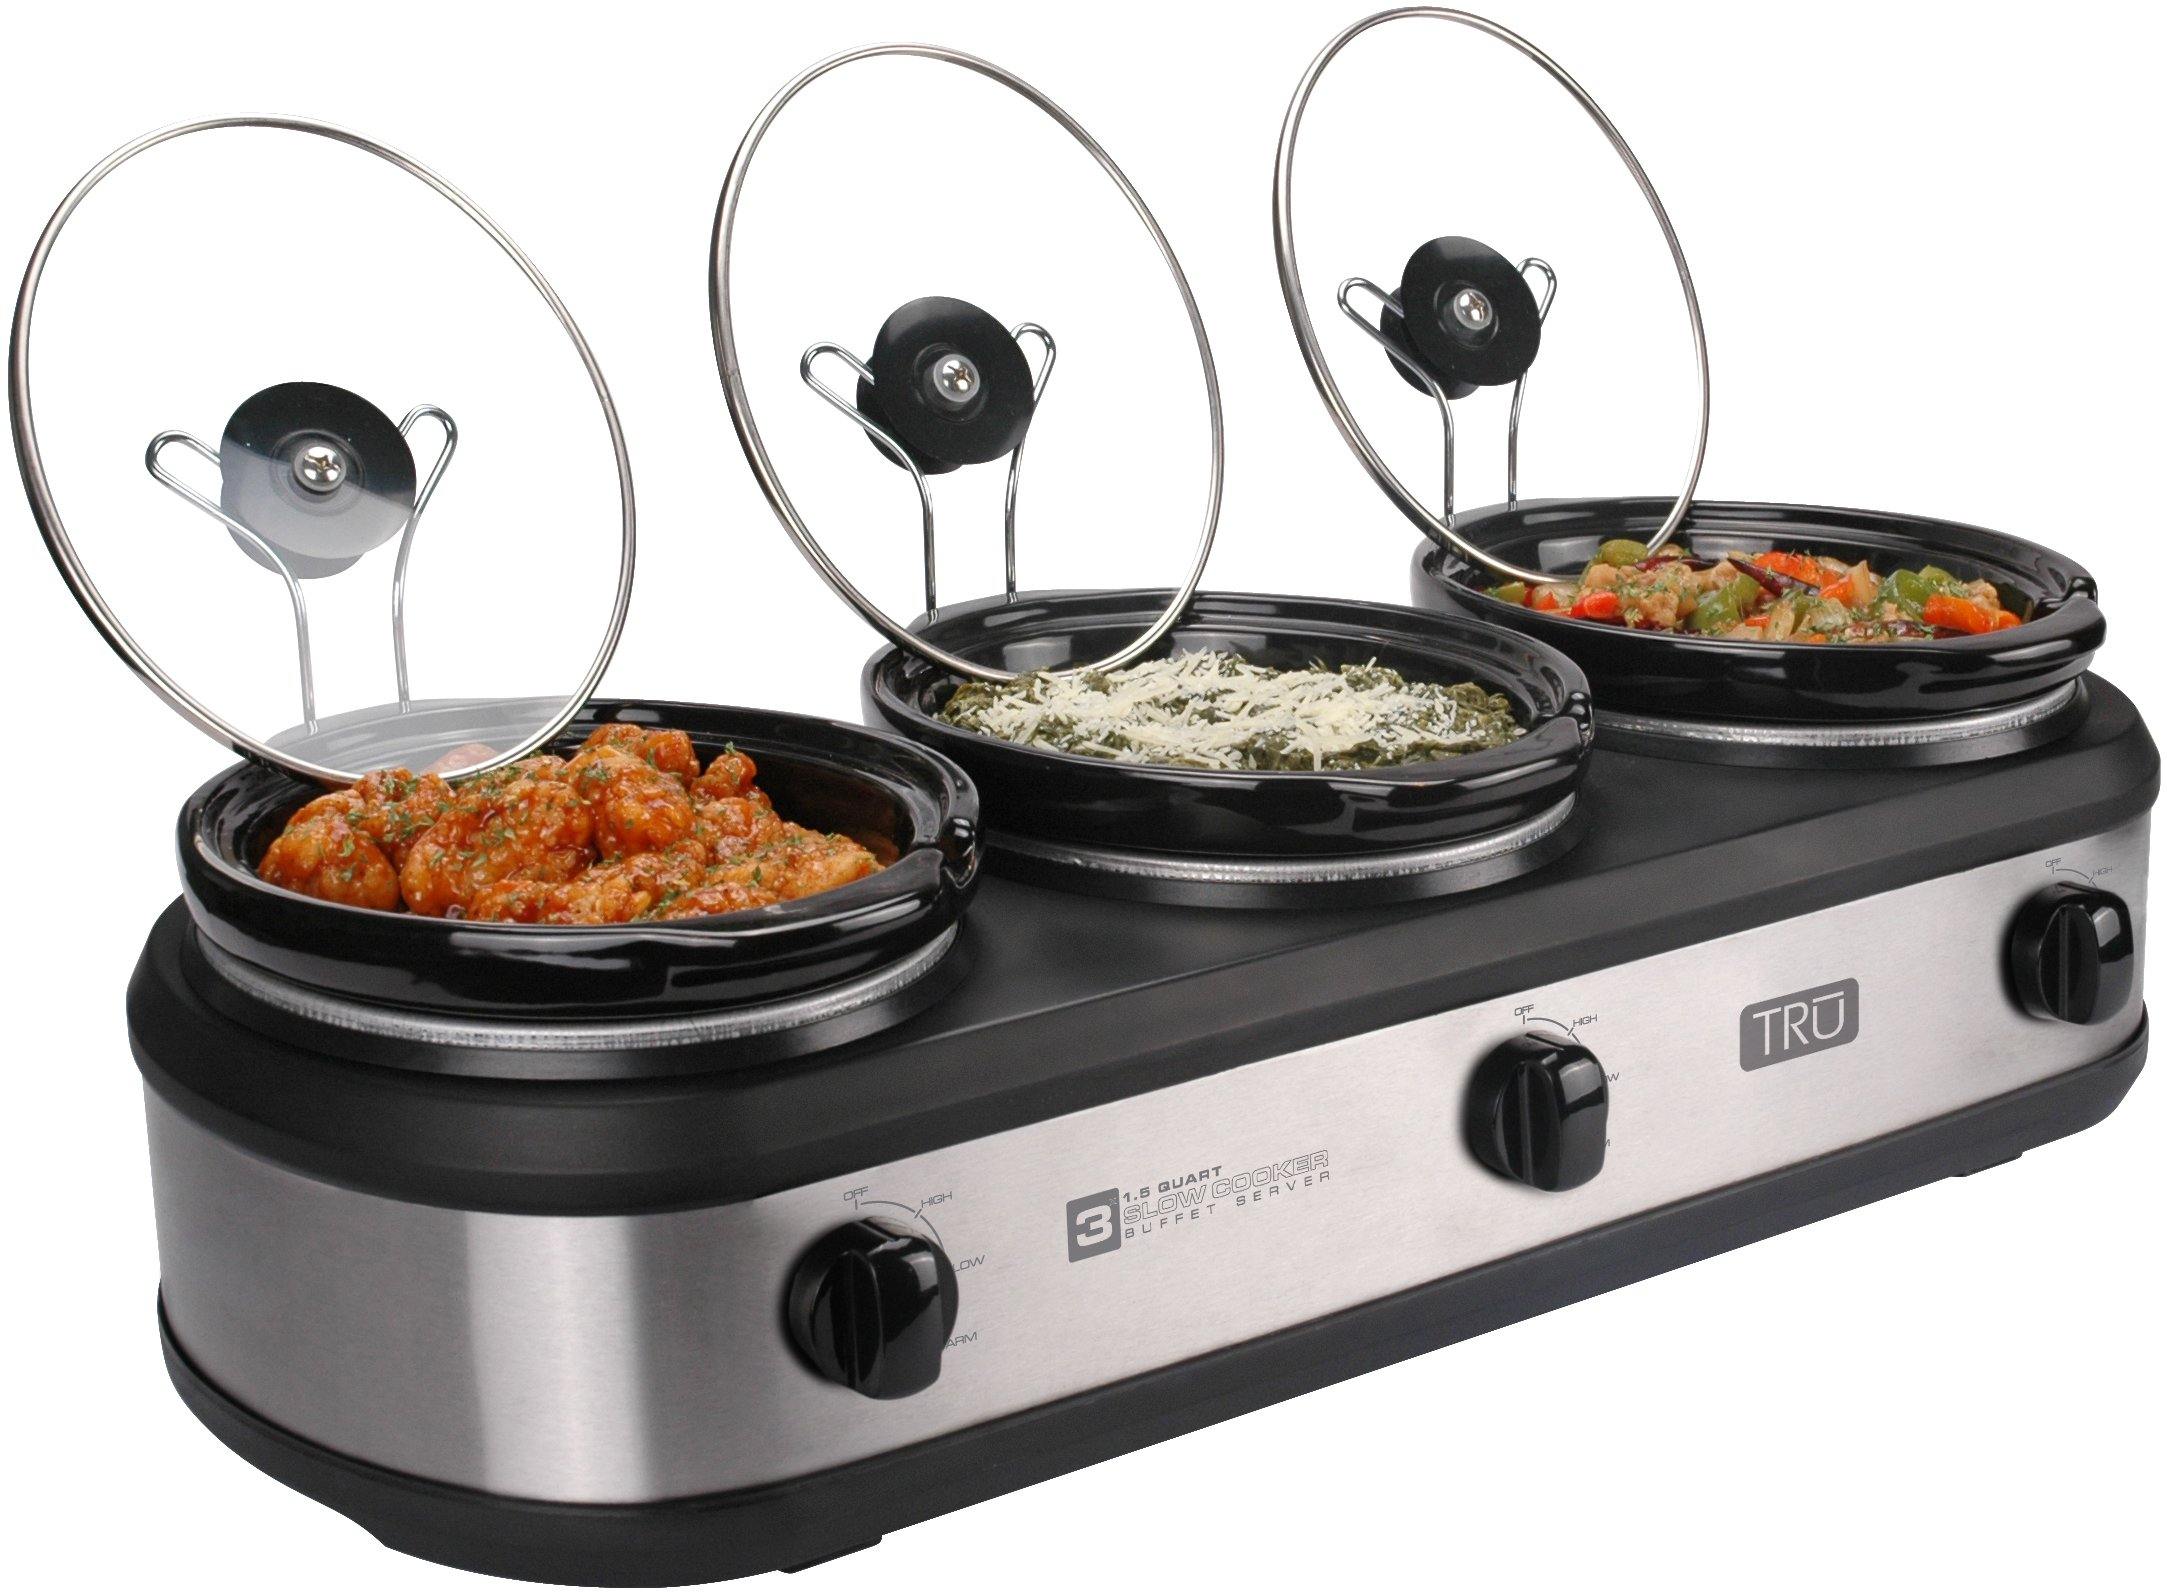 GE Triple Slow Cooker Buffet Server - 3 Pot Food Warmer - Cookers &  Steamers, Facebook Marketplace